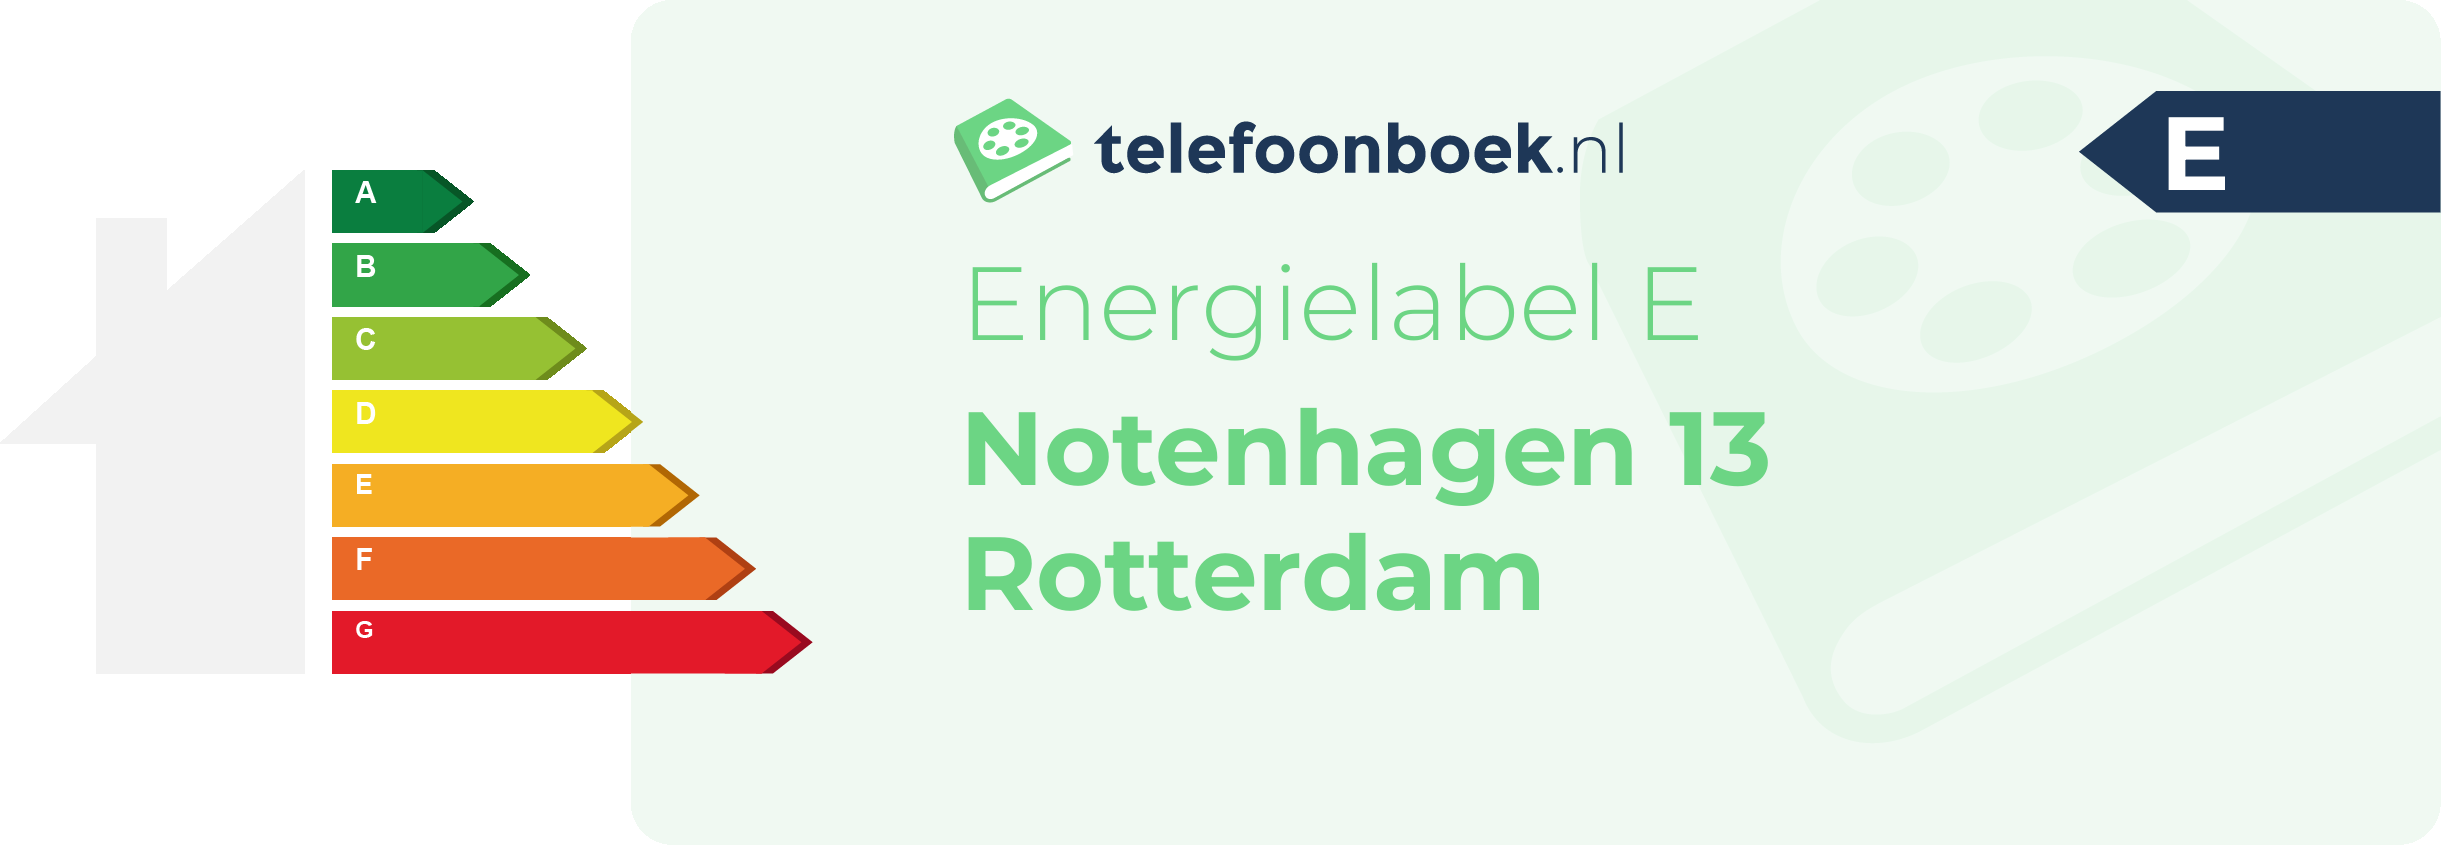 Energielabel Notenhagen 13 Rotterdam